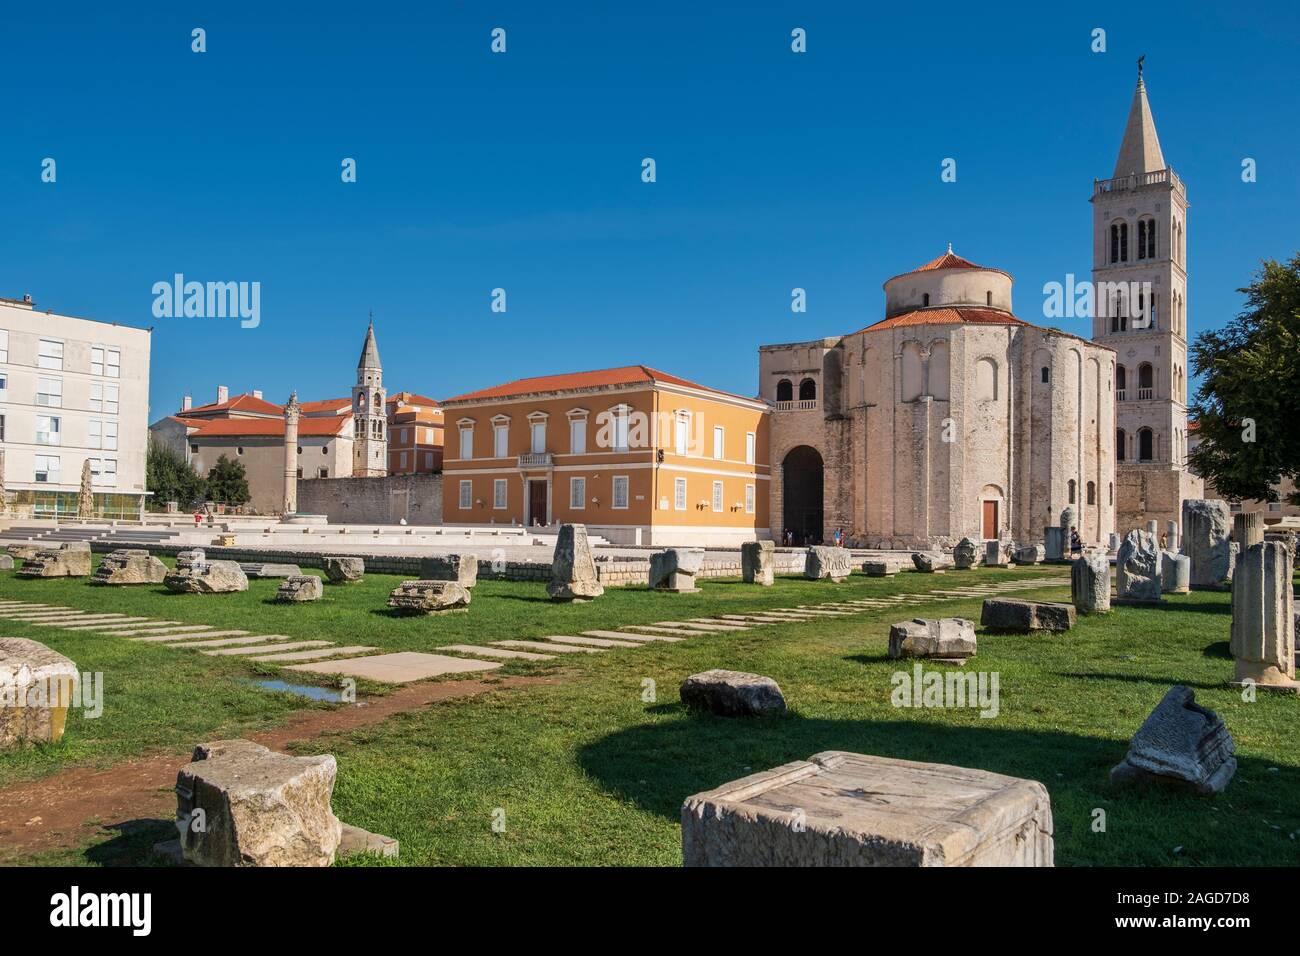 St Donatus' Church and Roman Forum, Zadar, Croatia Stock Photo